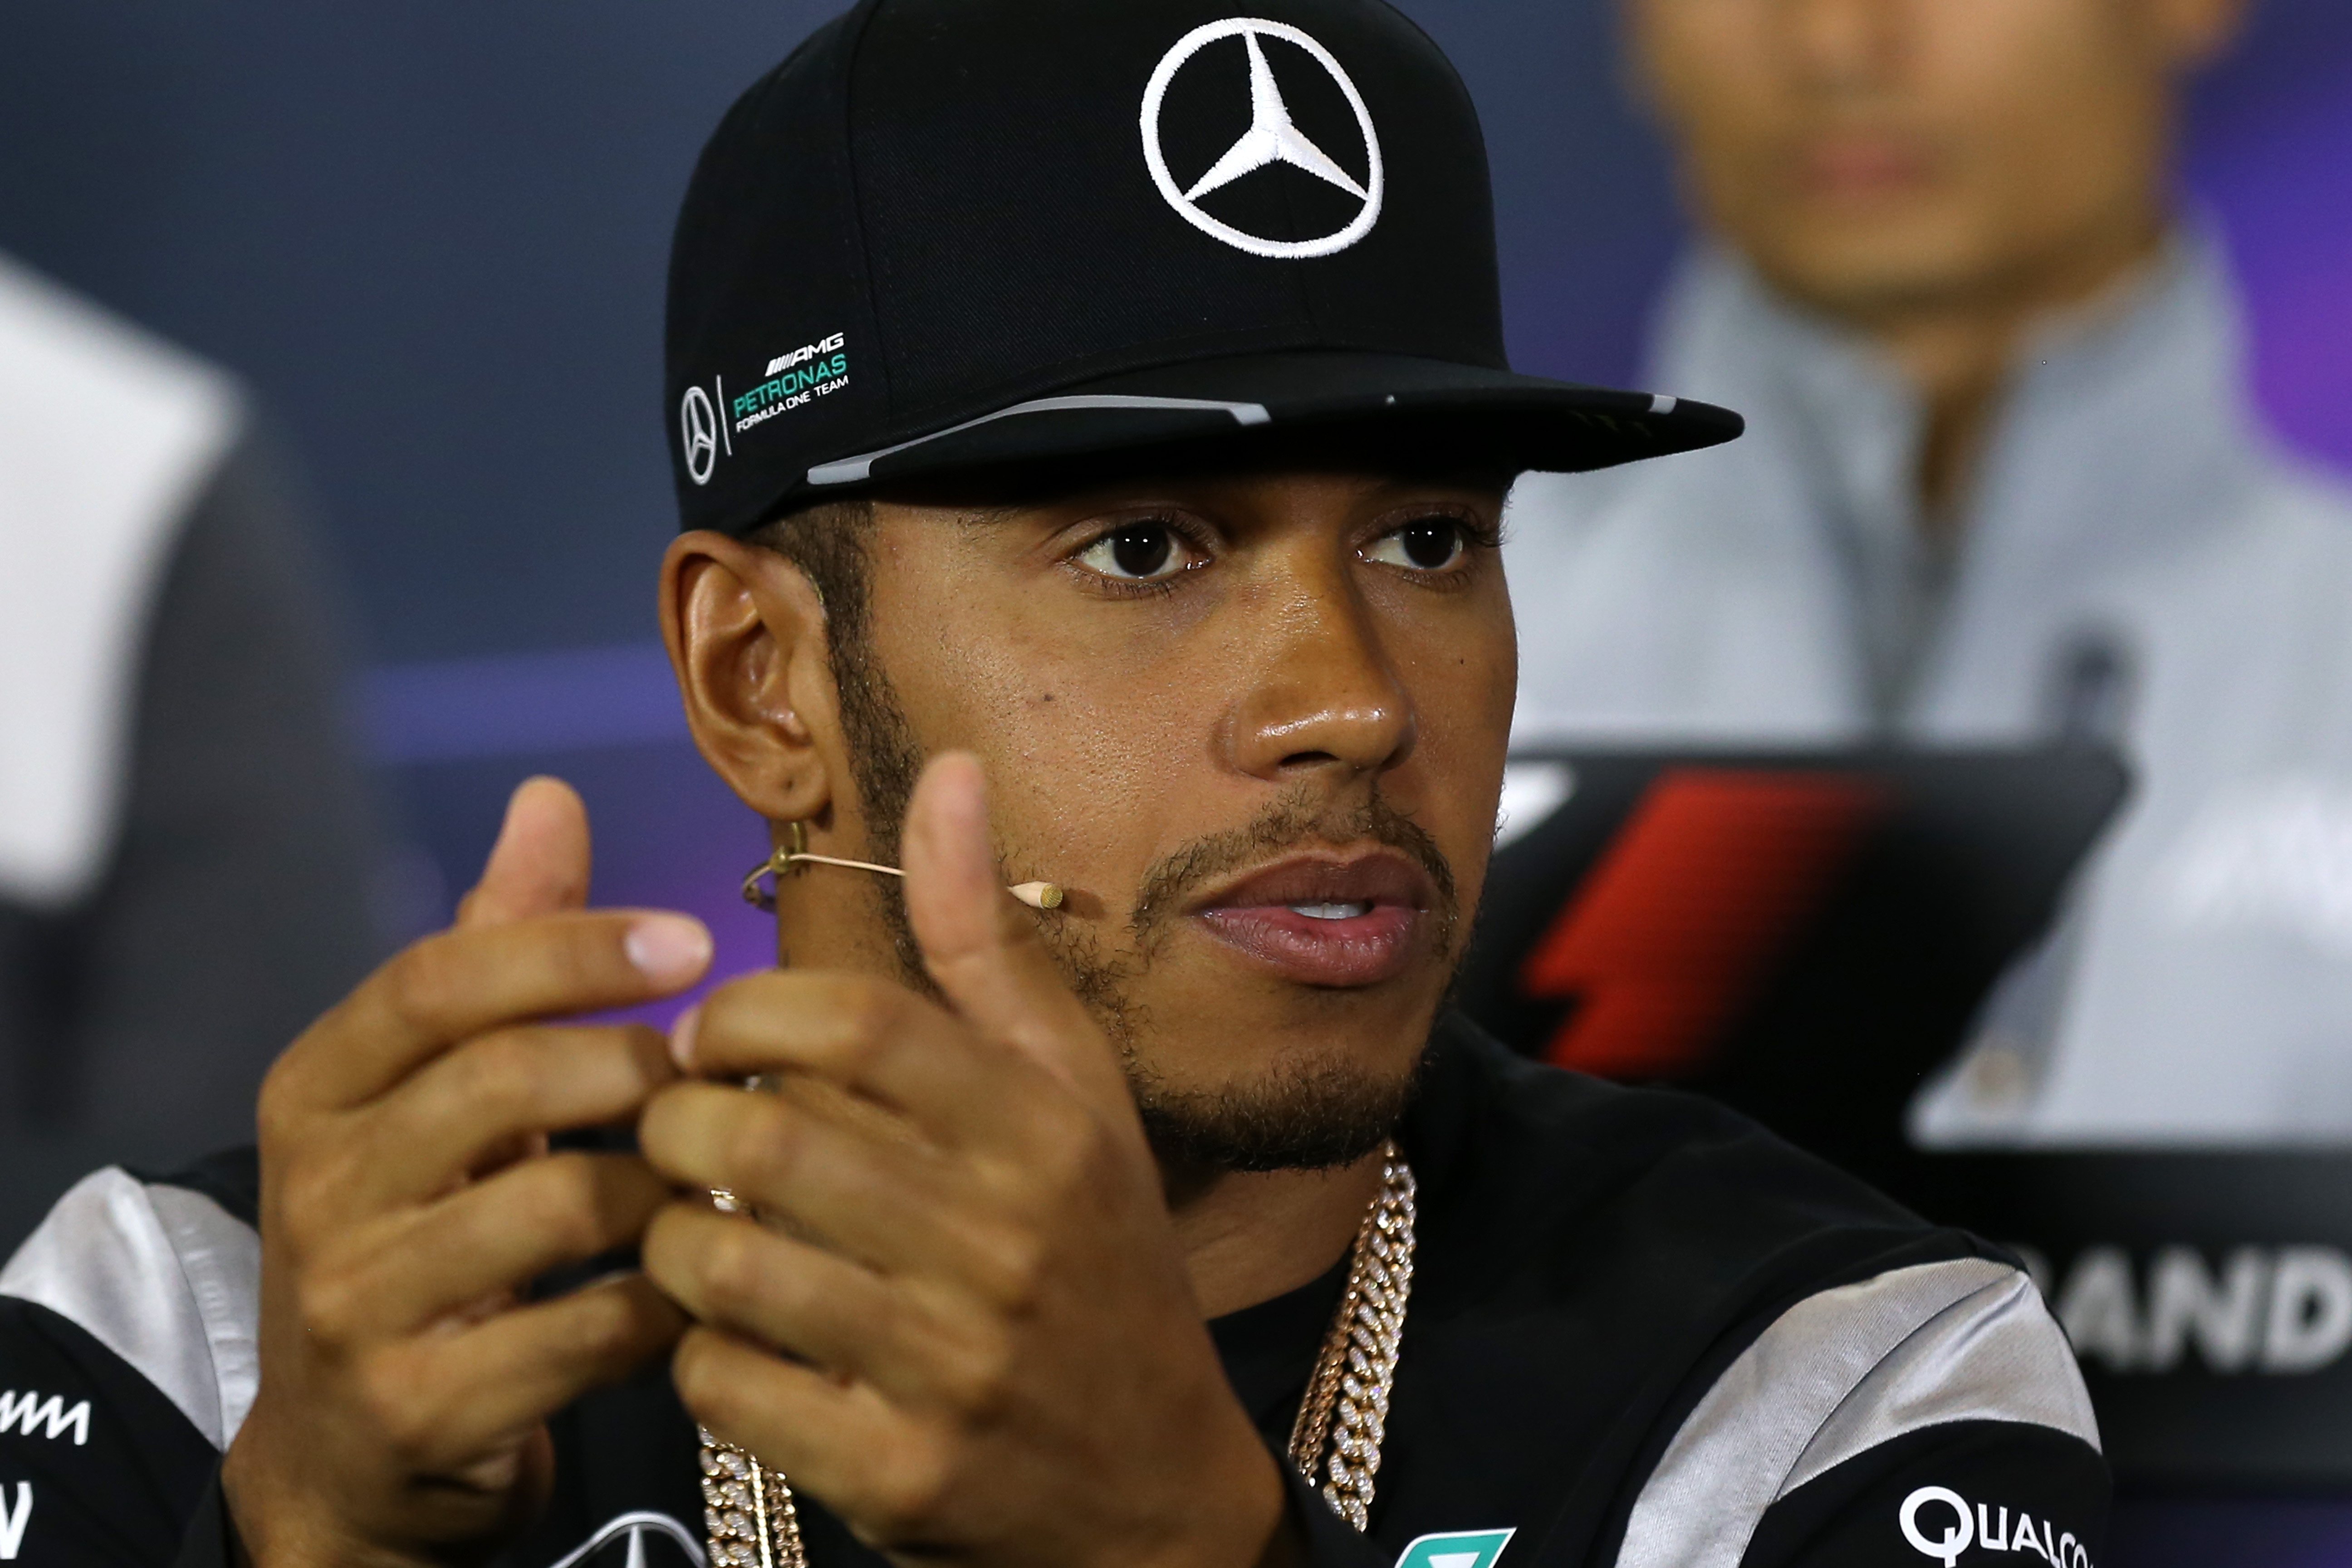 Motor Racing: Rosberg, Hamilton on final warning, says Mercedes boss Wolff